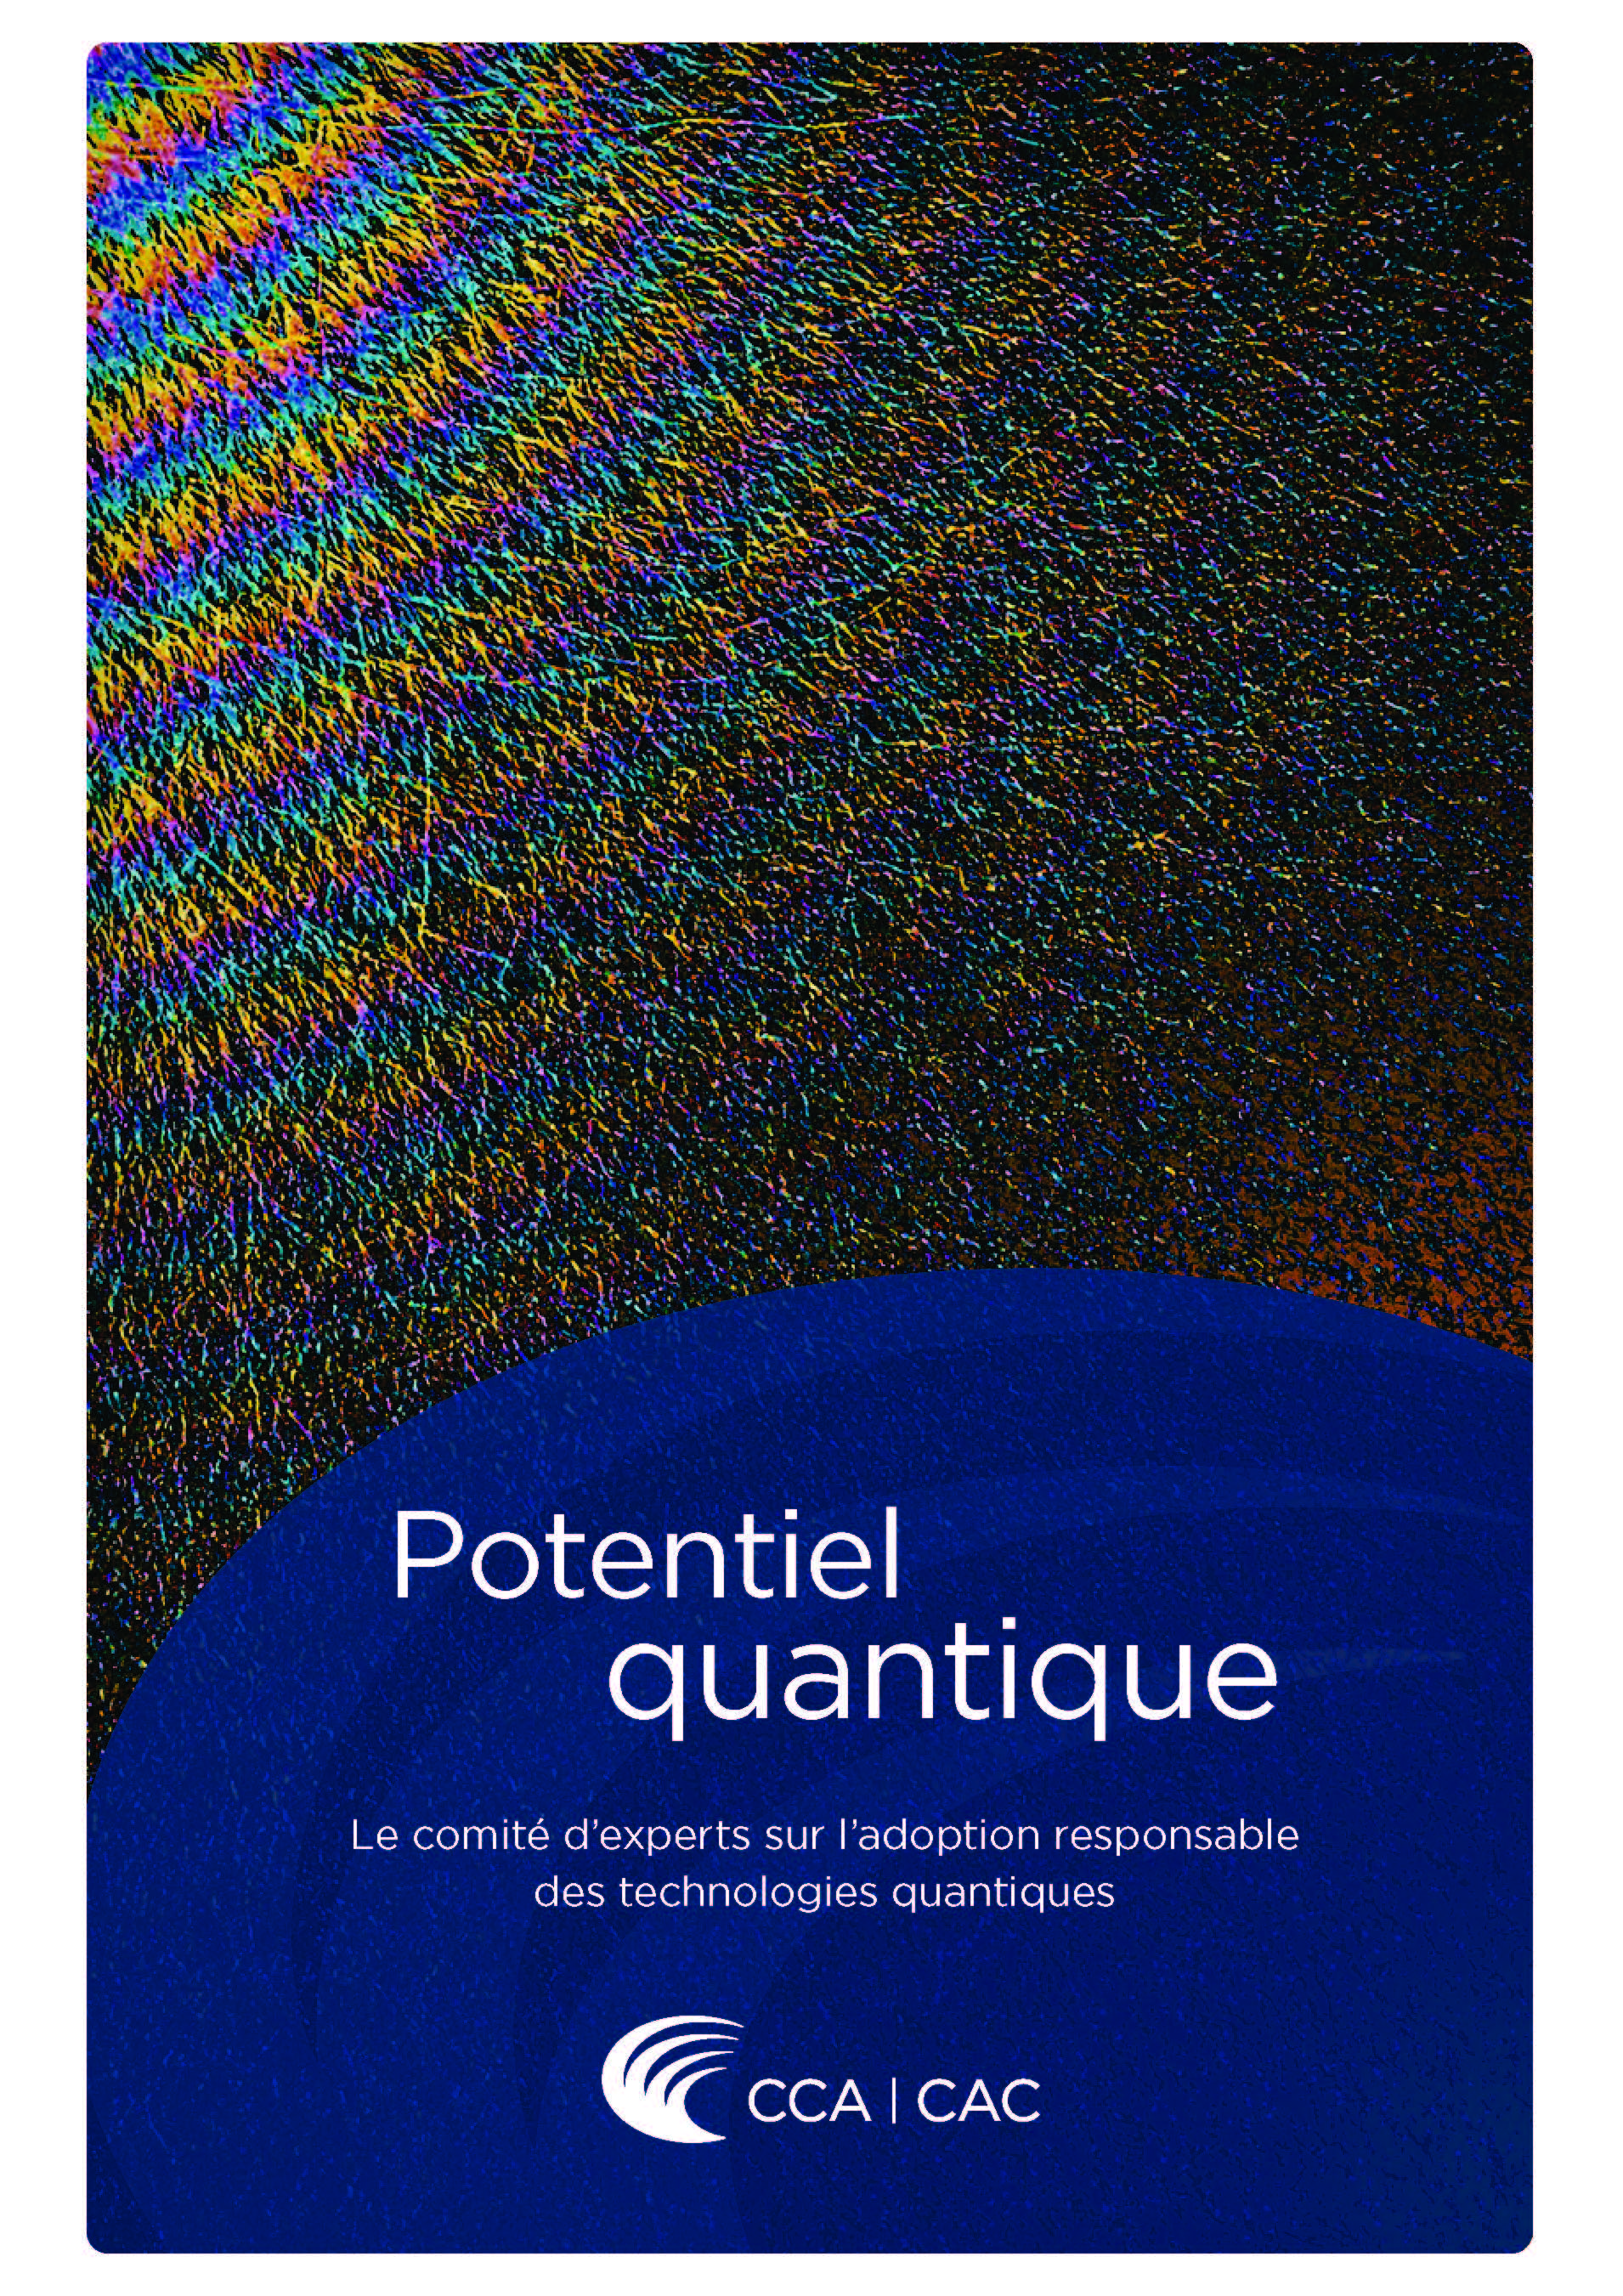 QuantumPotential_Cover_FR